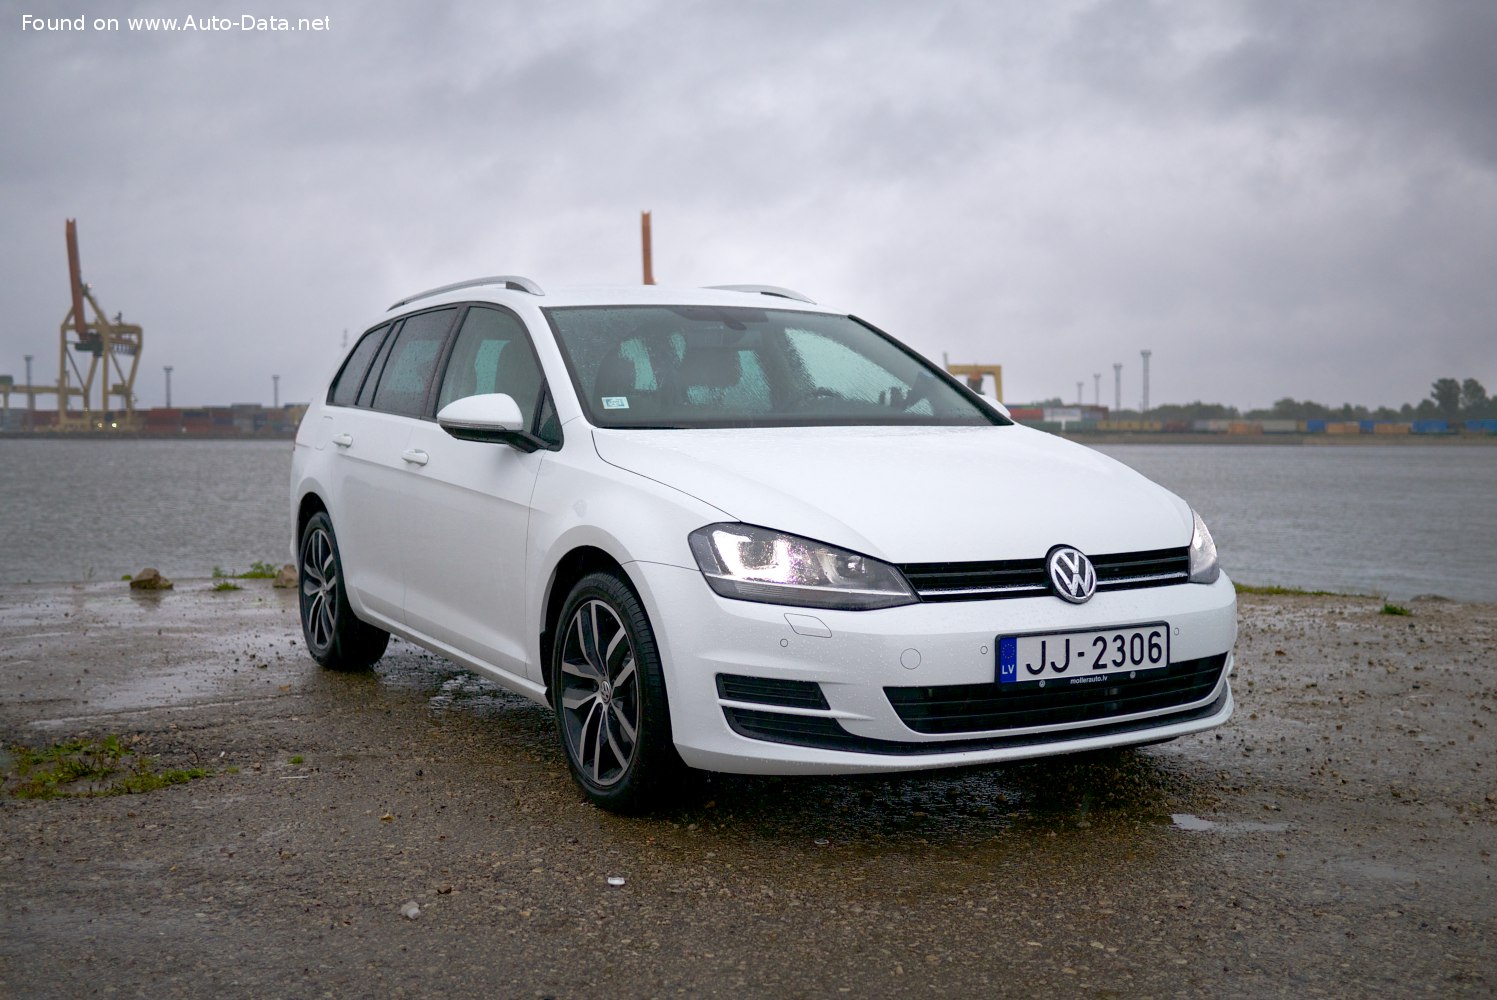 2013 Volkswagen Golf VII Variant  Technical Specs, Fuel consumption,  Dimensions